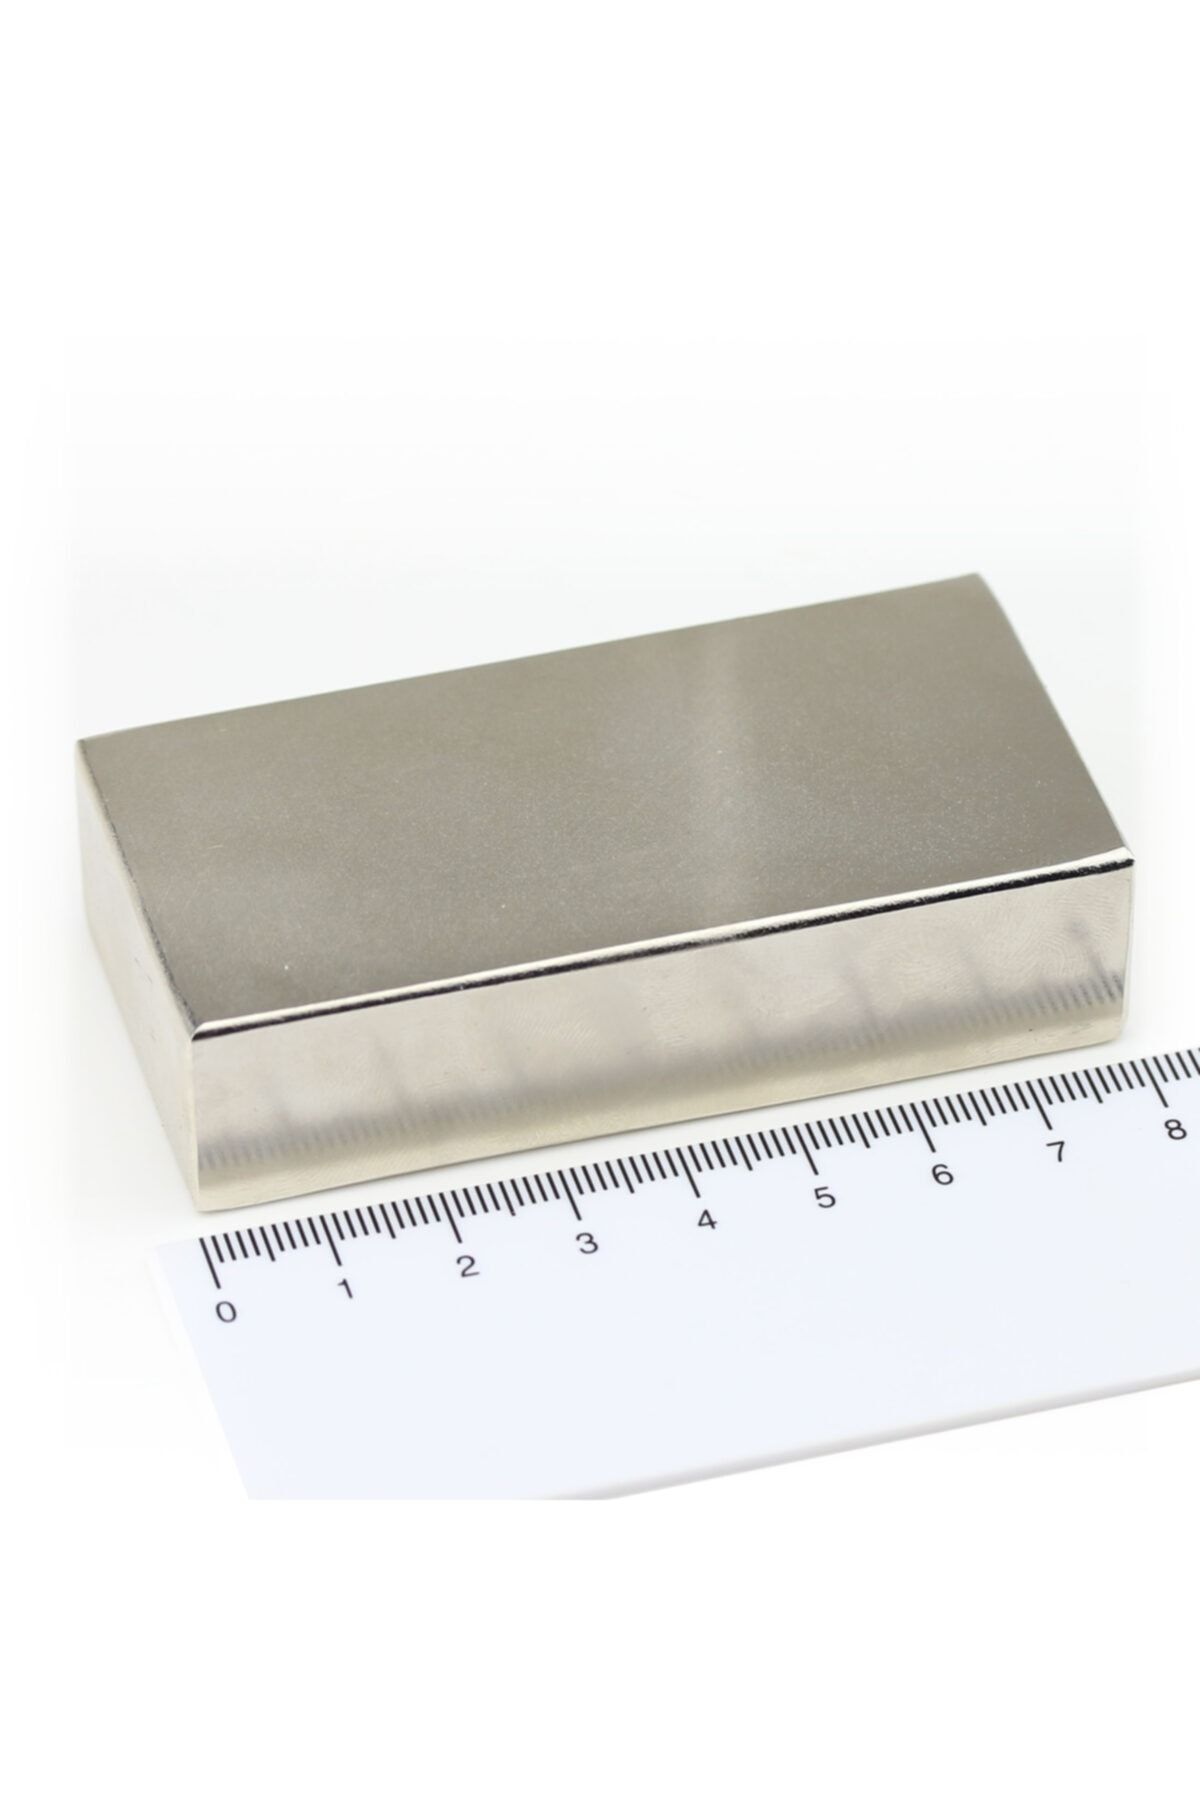 Dünya Magnet Çok Güçlü Neodyum Mıknatıs, Büyük Boy - 80mm x 40mm x 20mm